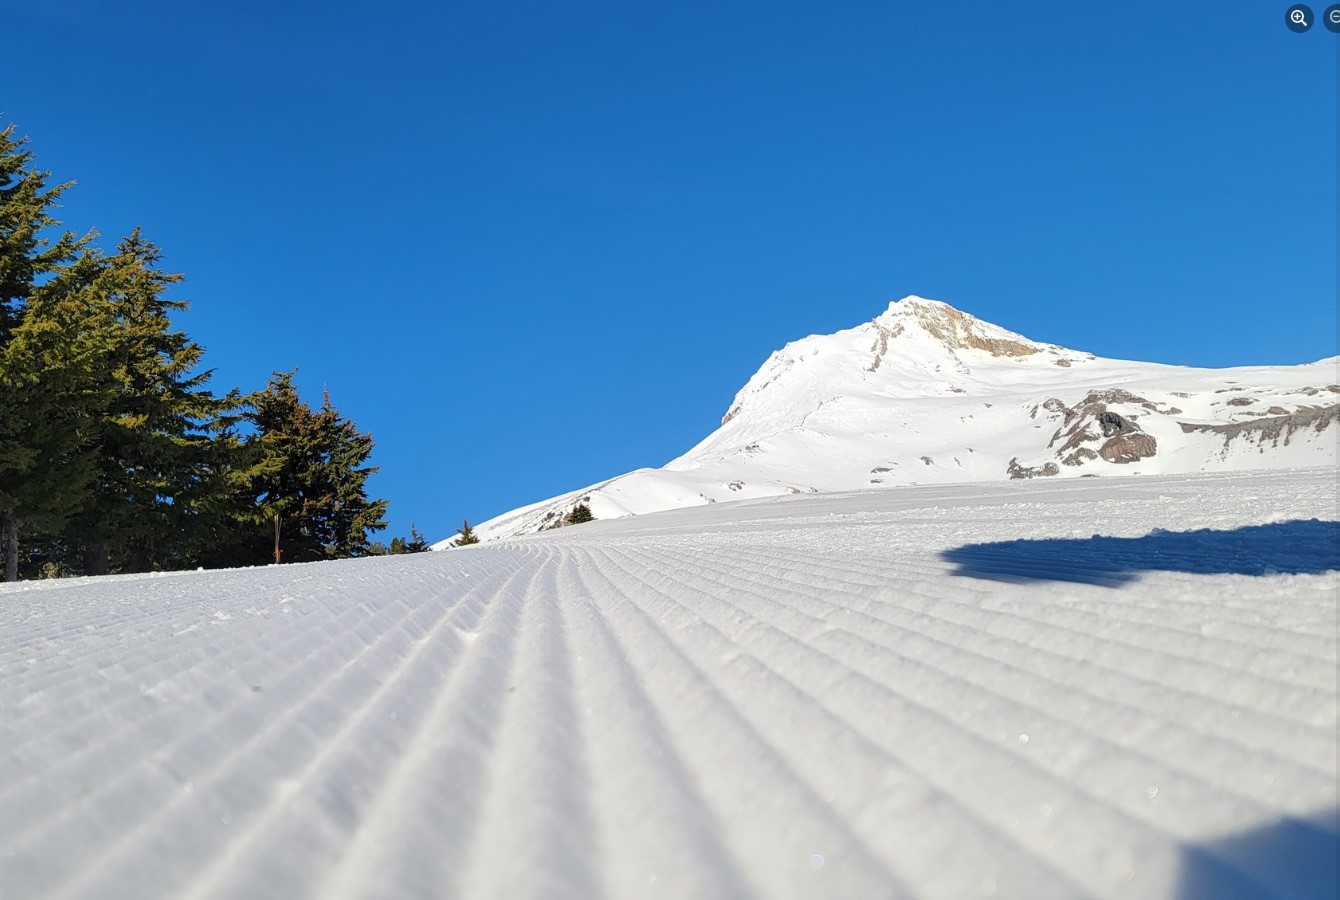 ski resort Mt. Hood Meadows located in Oregon (USA)